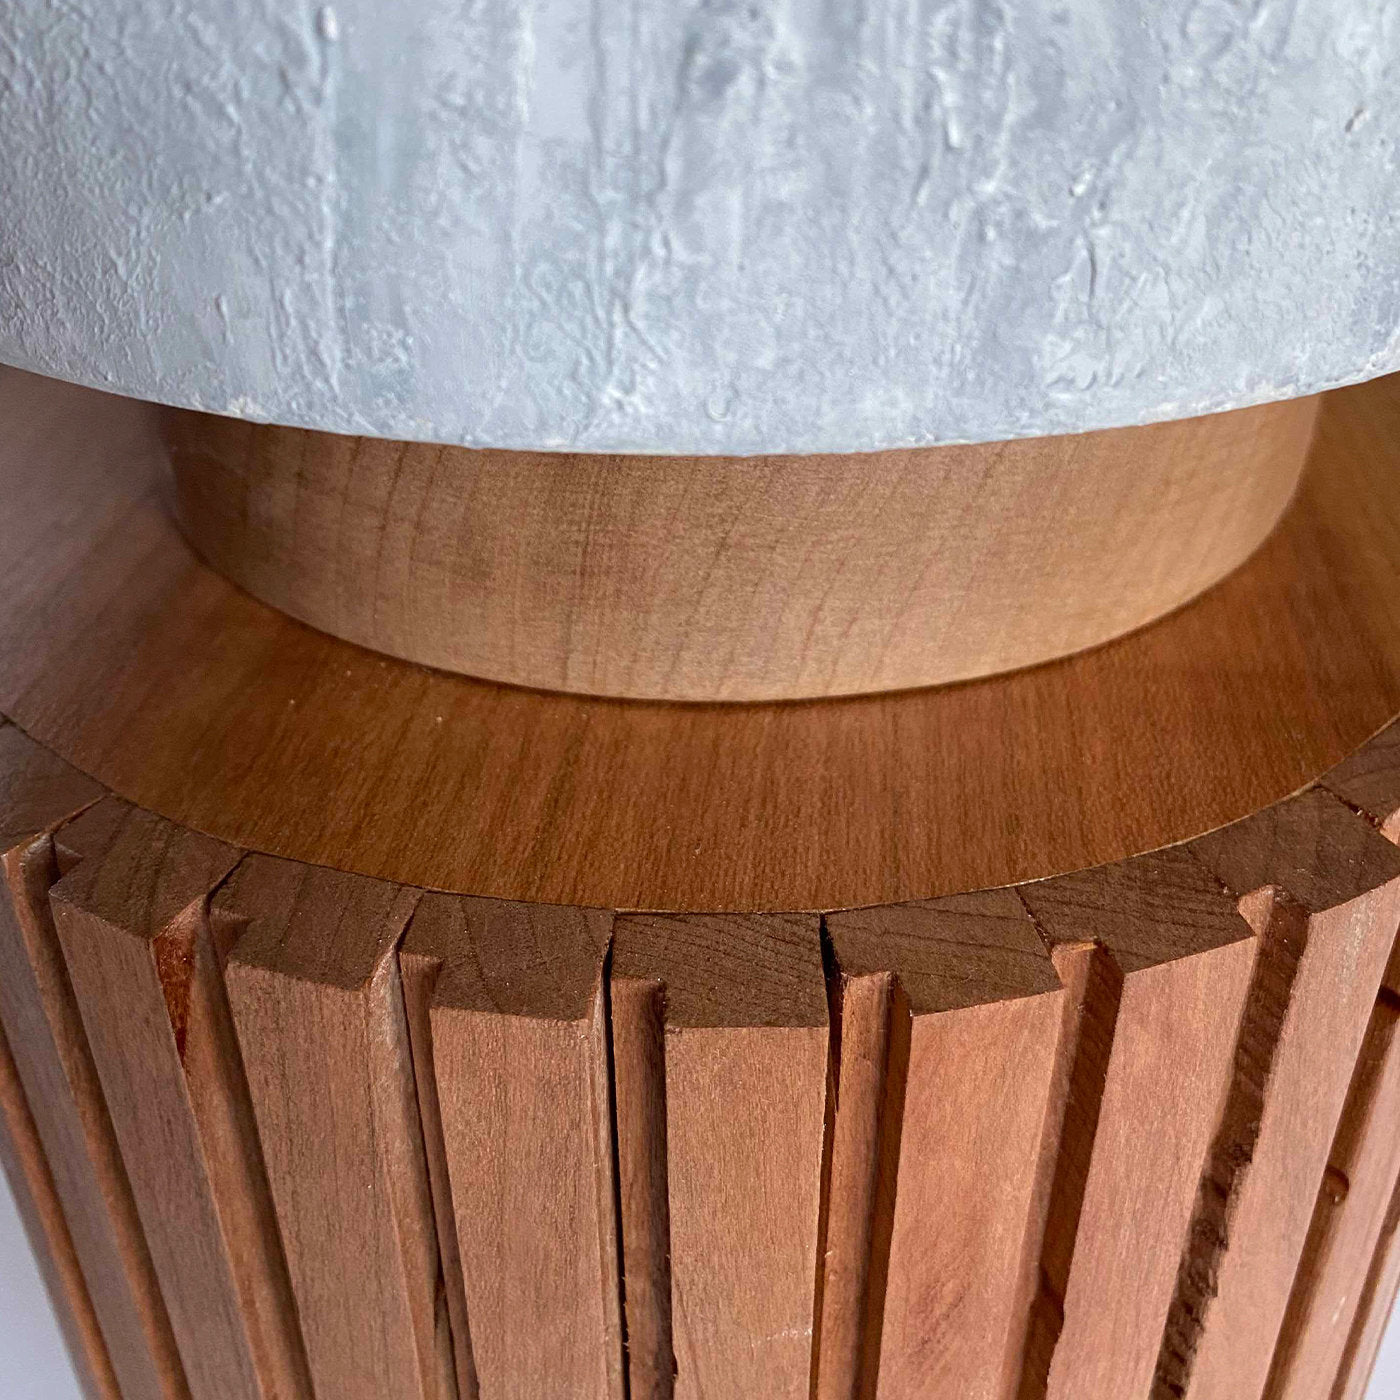 Totem Table Lamp by Mascia Meccani #4 - Alternative view 1